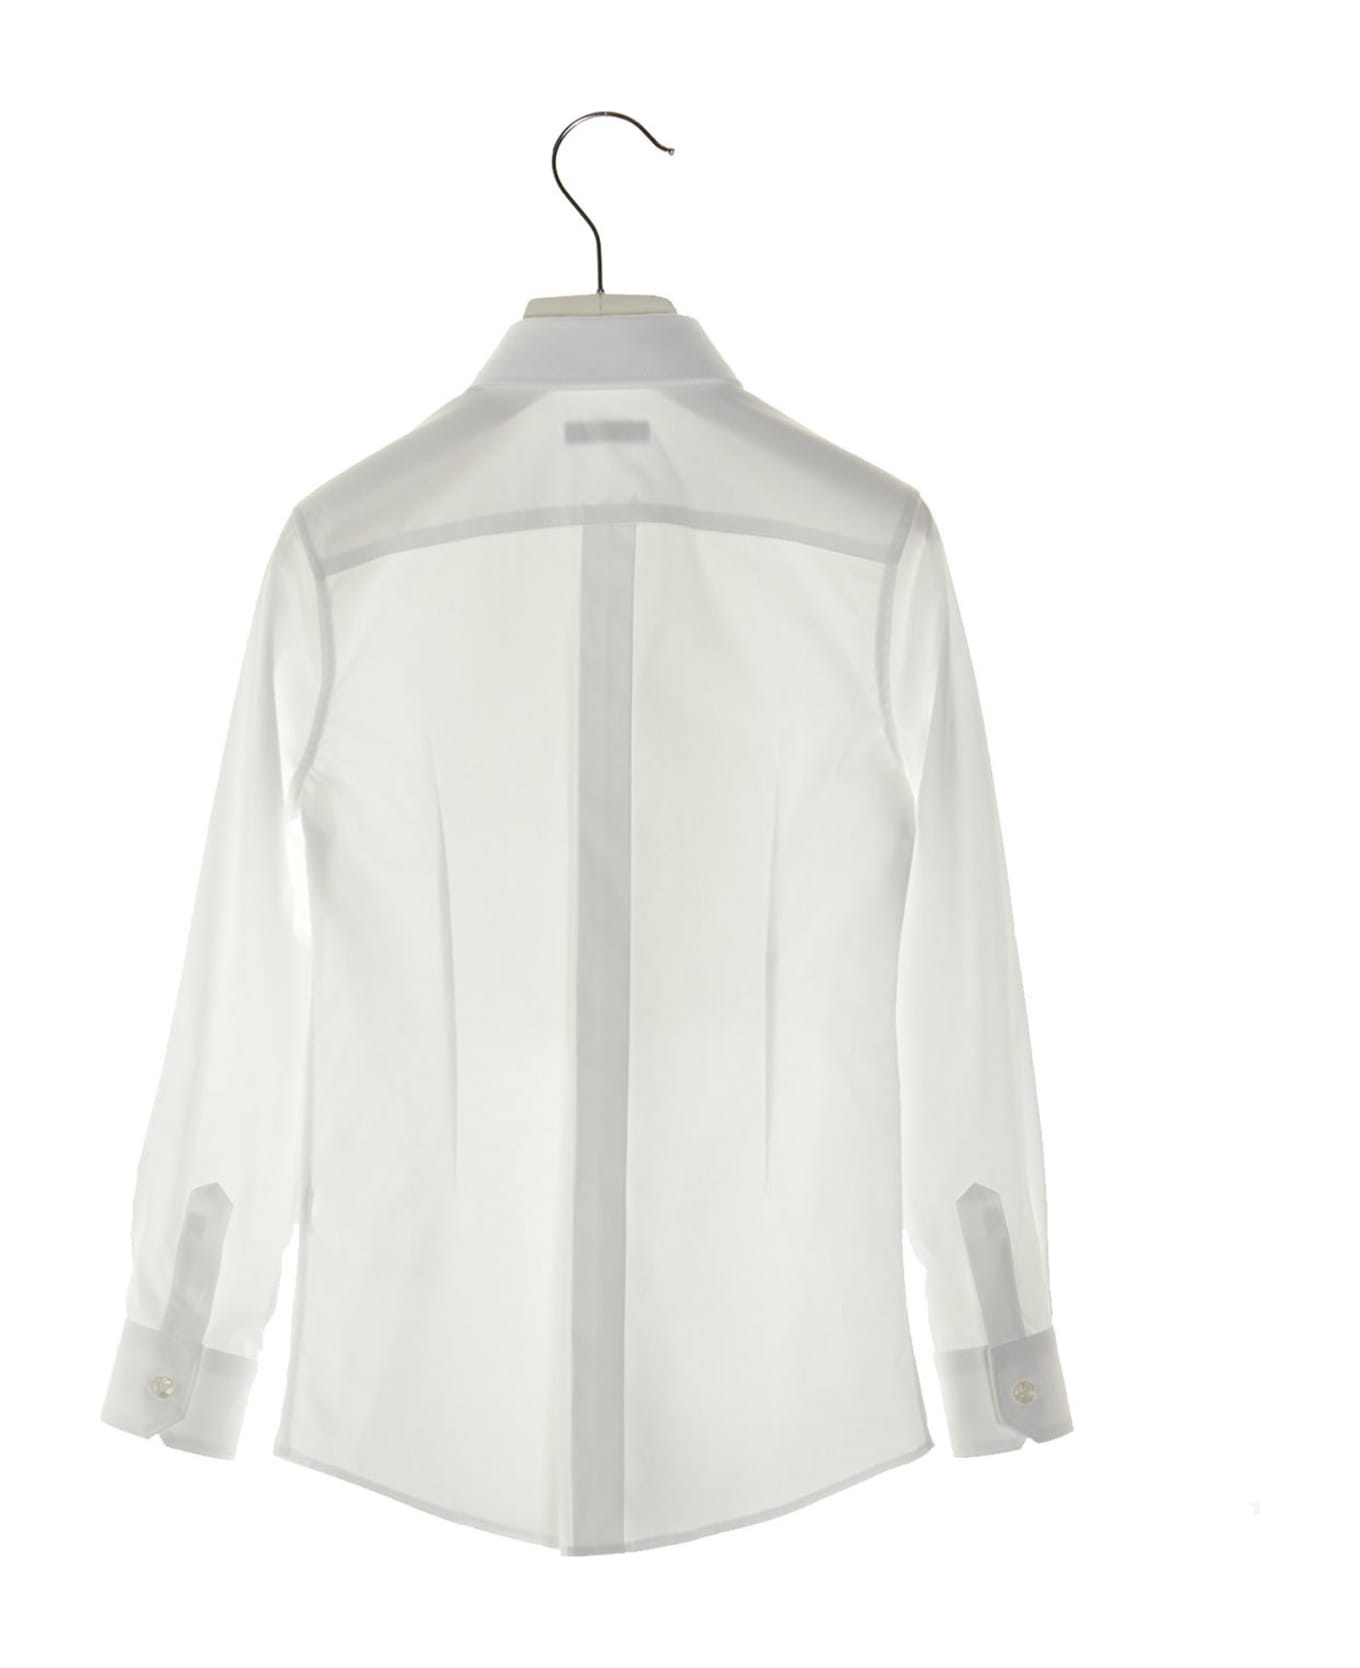 Dolce & Gabbana 're-edition S/s 2001' Shirt - White